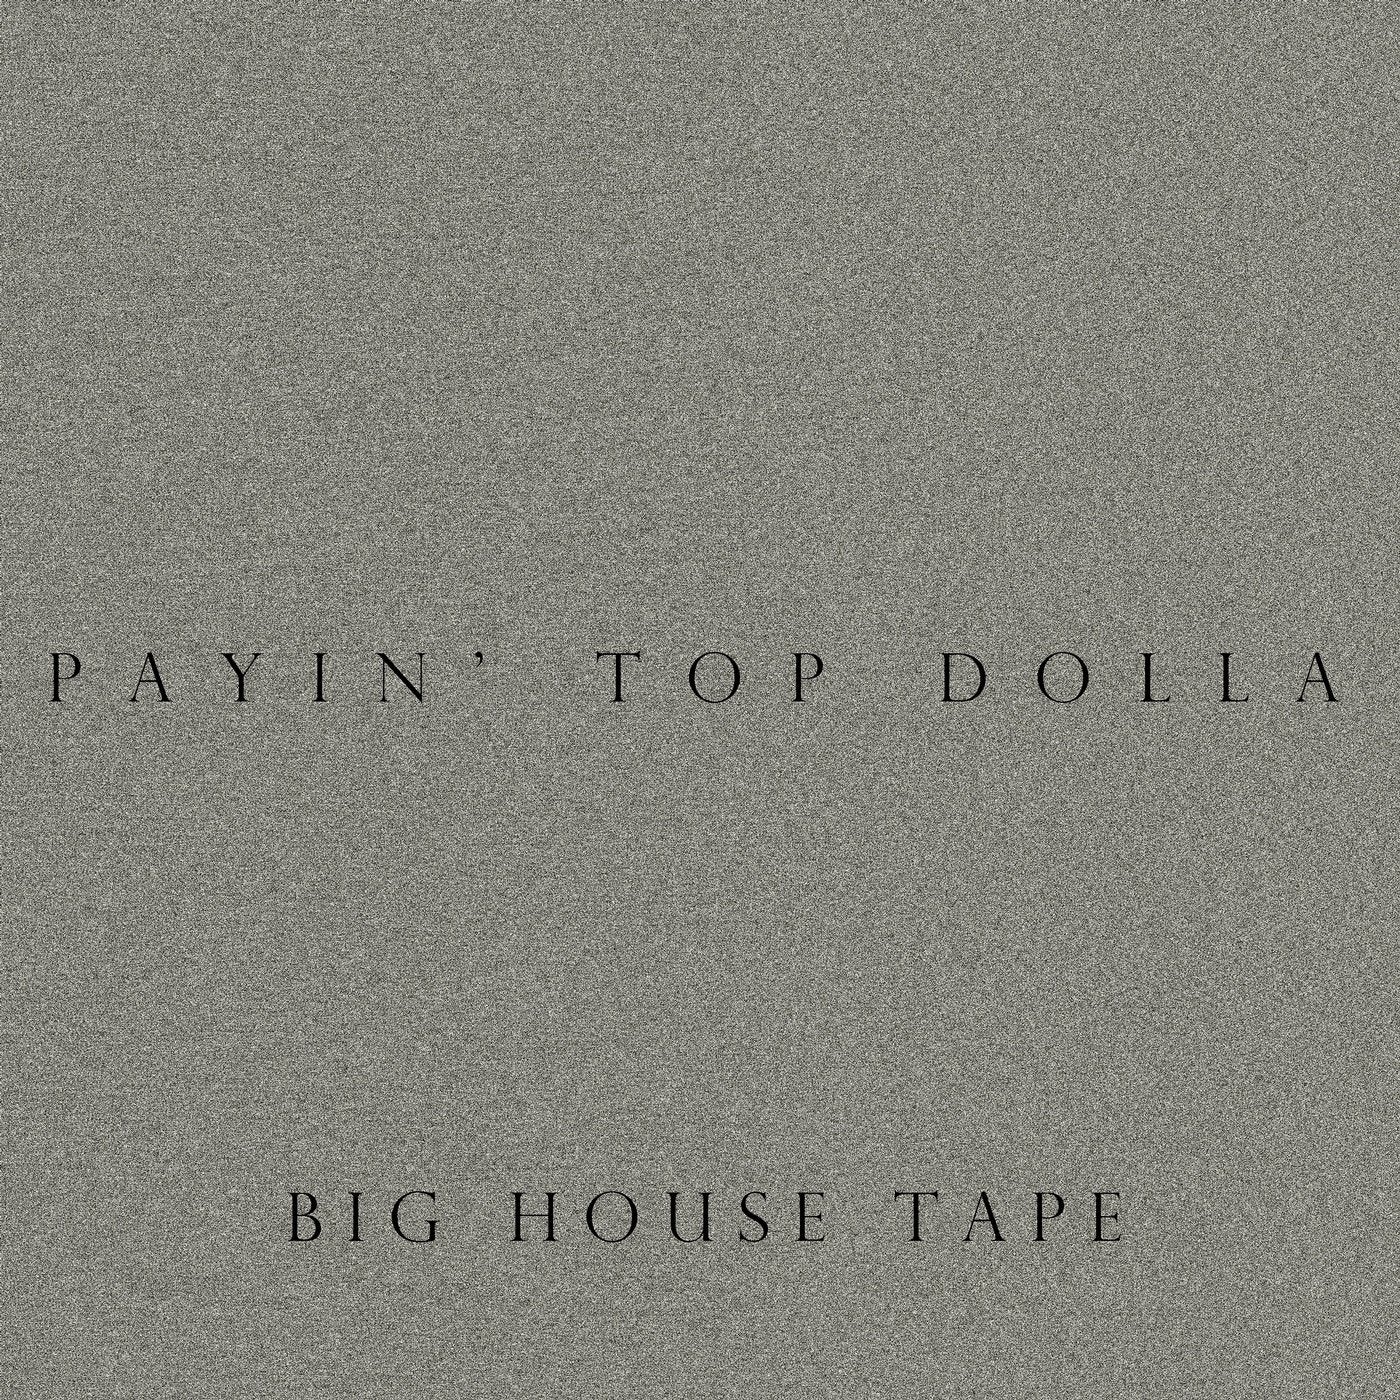 Big House Tape